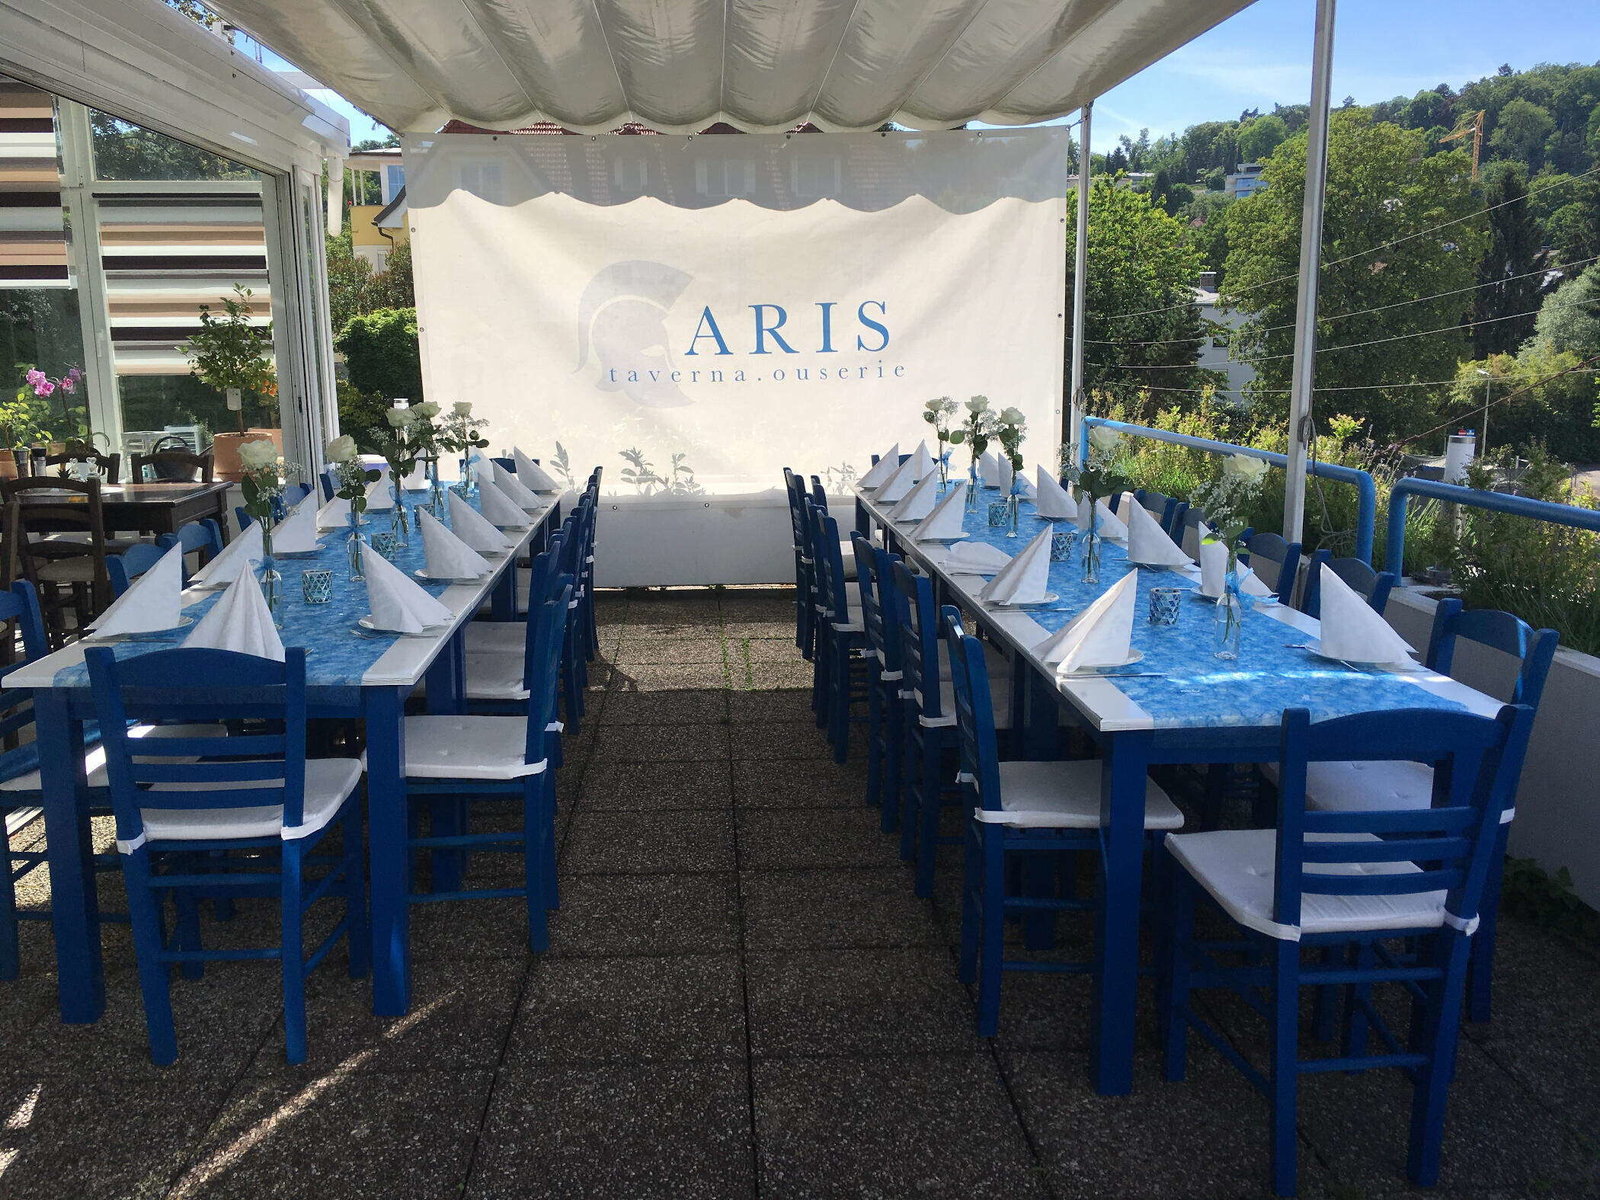 ARIS Taverna Ouserie in Linz